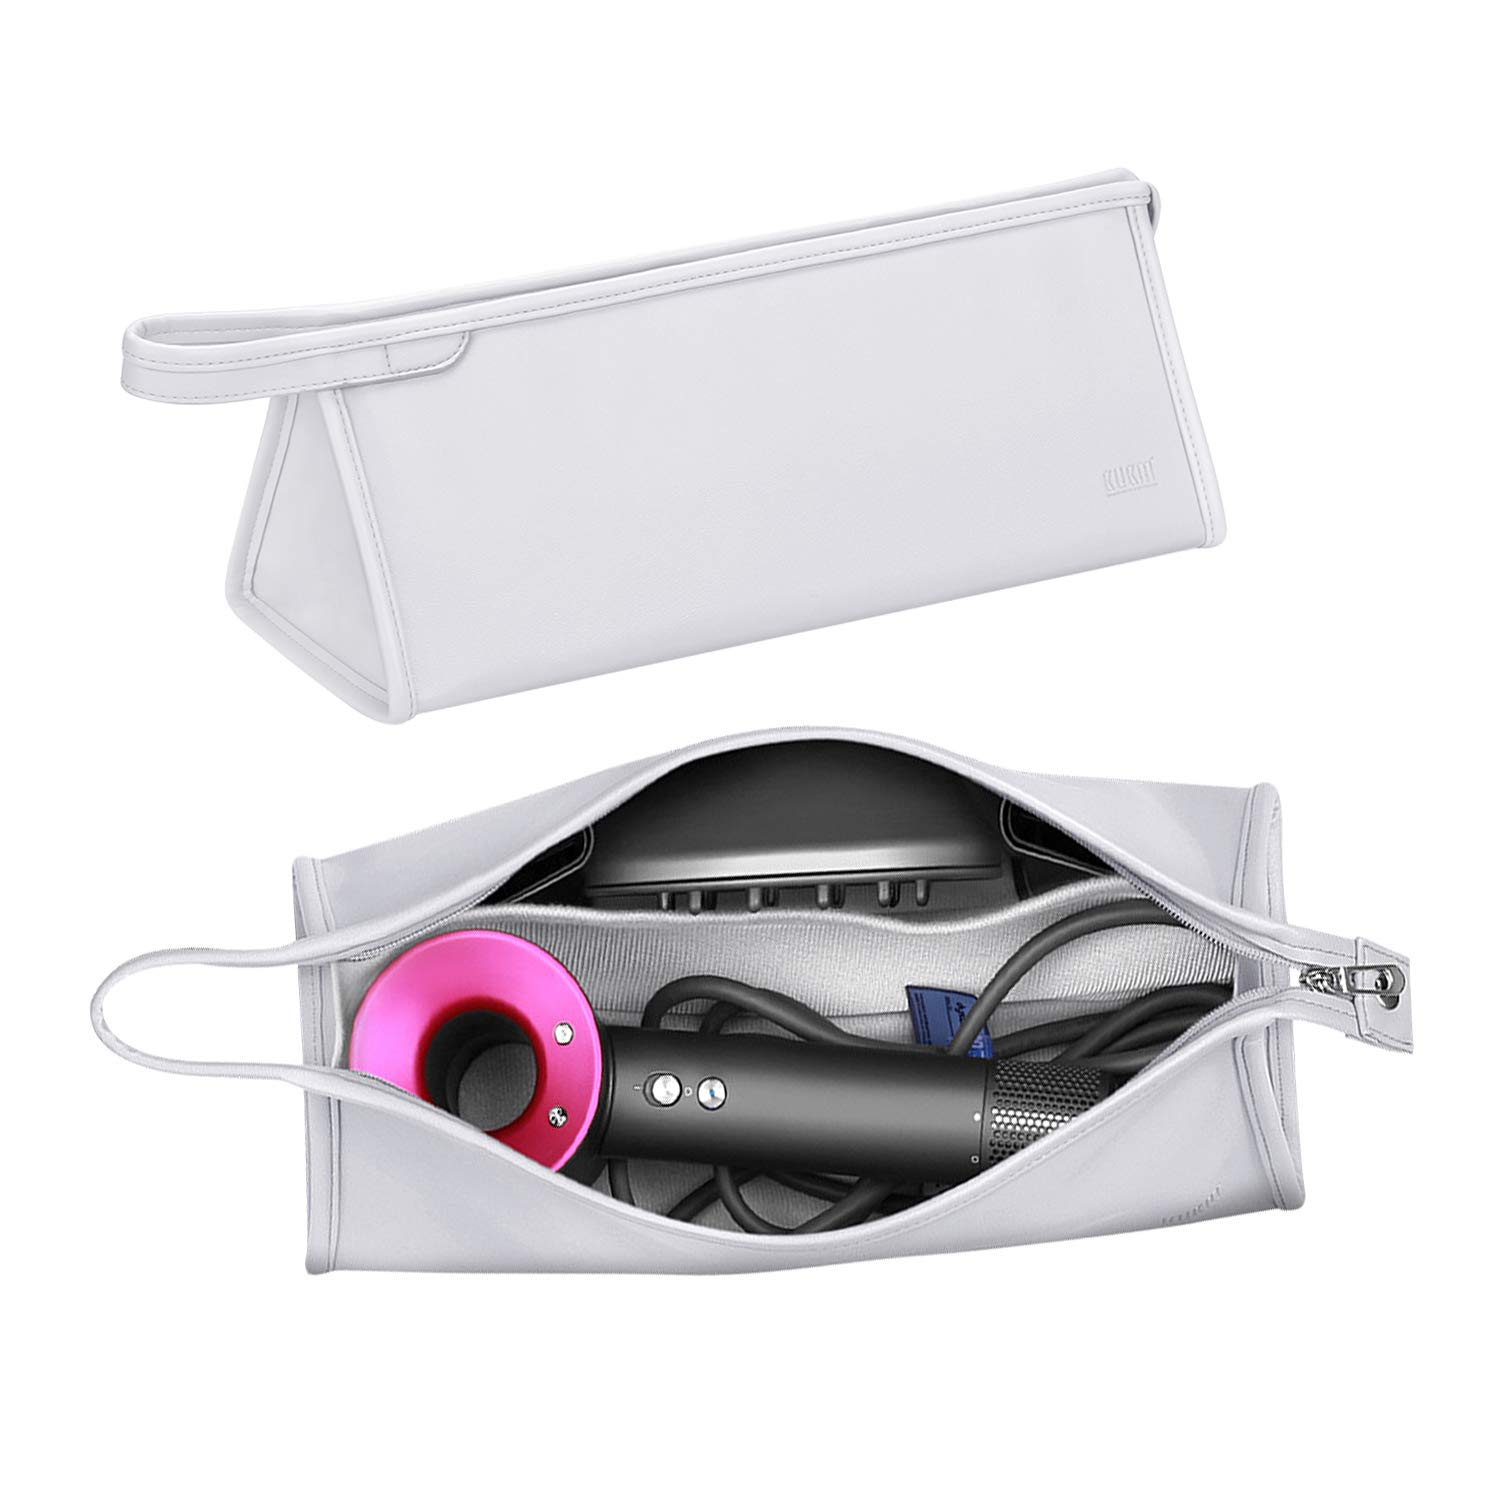 Mua Buwico PU Leather Travel Case Portable Storage Bag for Dyson Supersonic  Hair Dryer , Waterproof Anti-scratch Dustproof Shockproof Protection  Organizer Travel Gift Case (Silver) trên Amazon Mỹ chính hãng 2023 | Fado